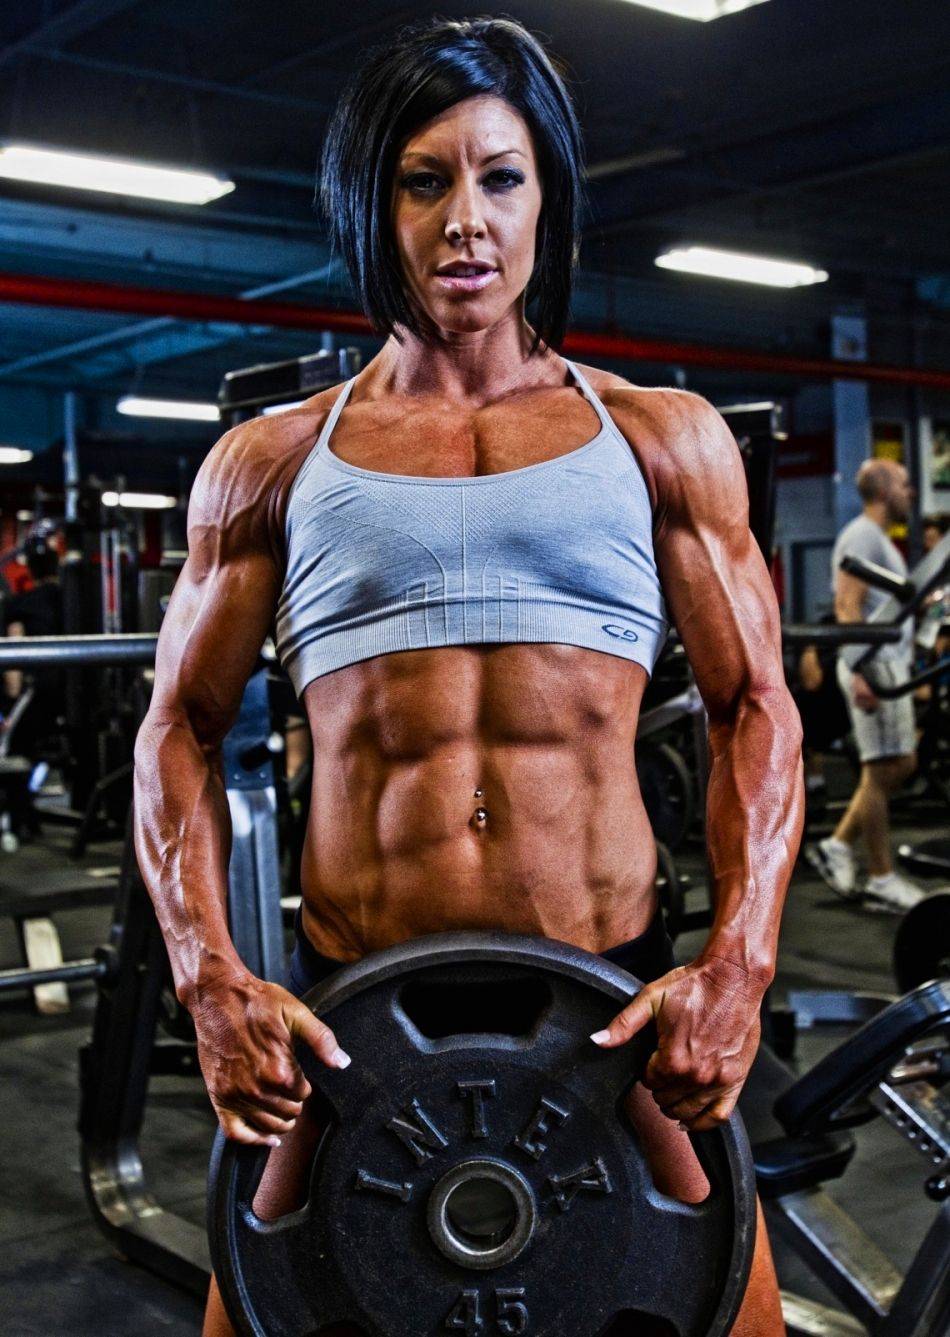 Dana linn bailey — complete profile: training, diet, height, weight, biography – fitness volt